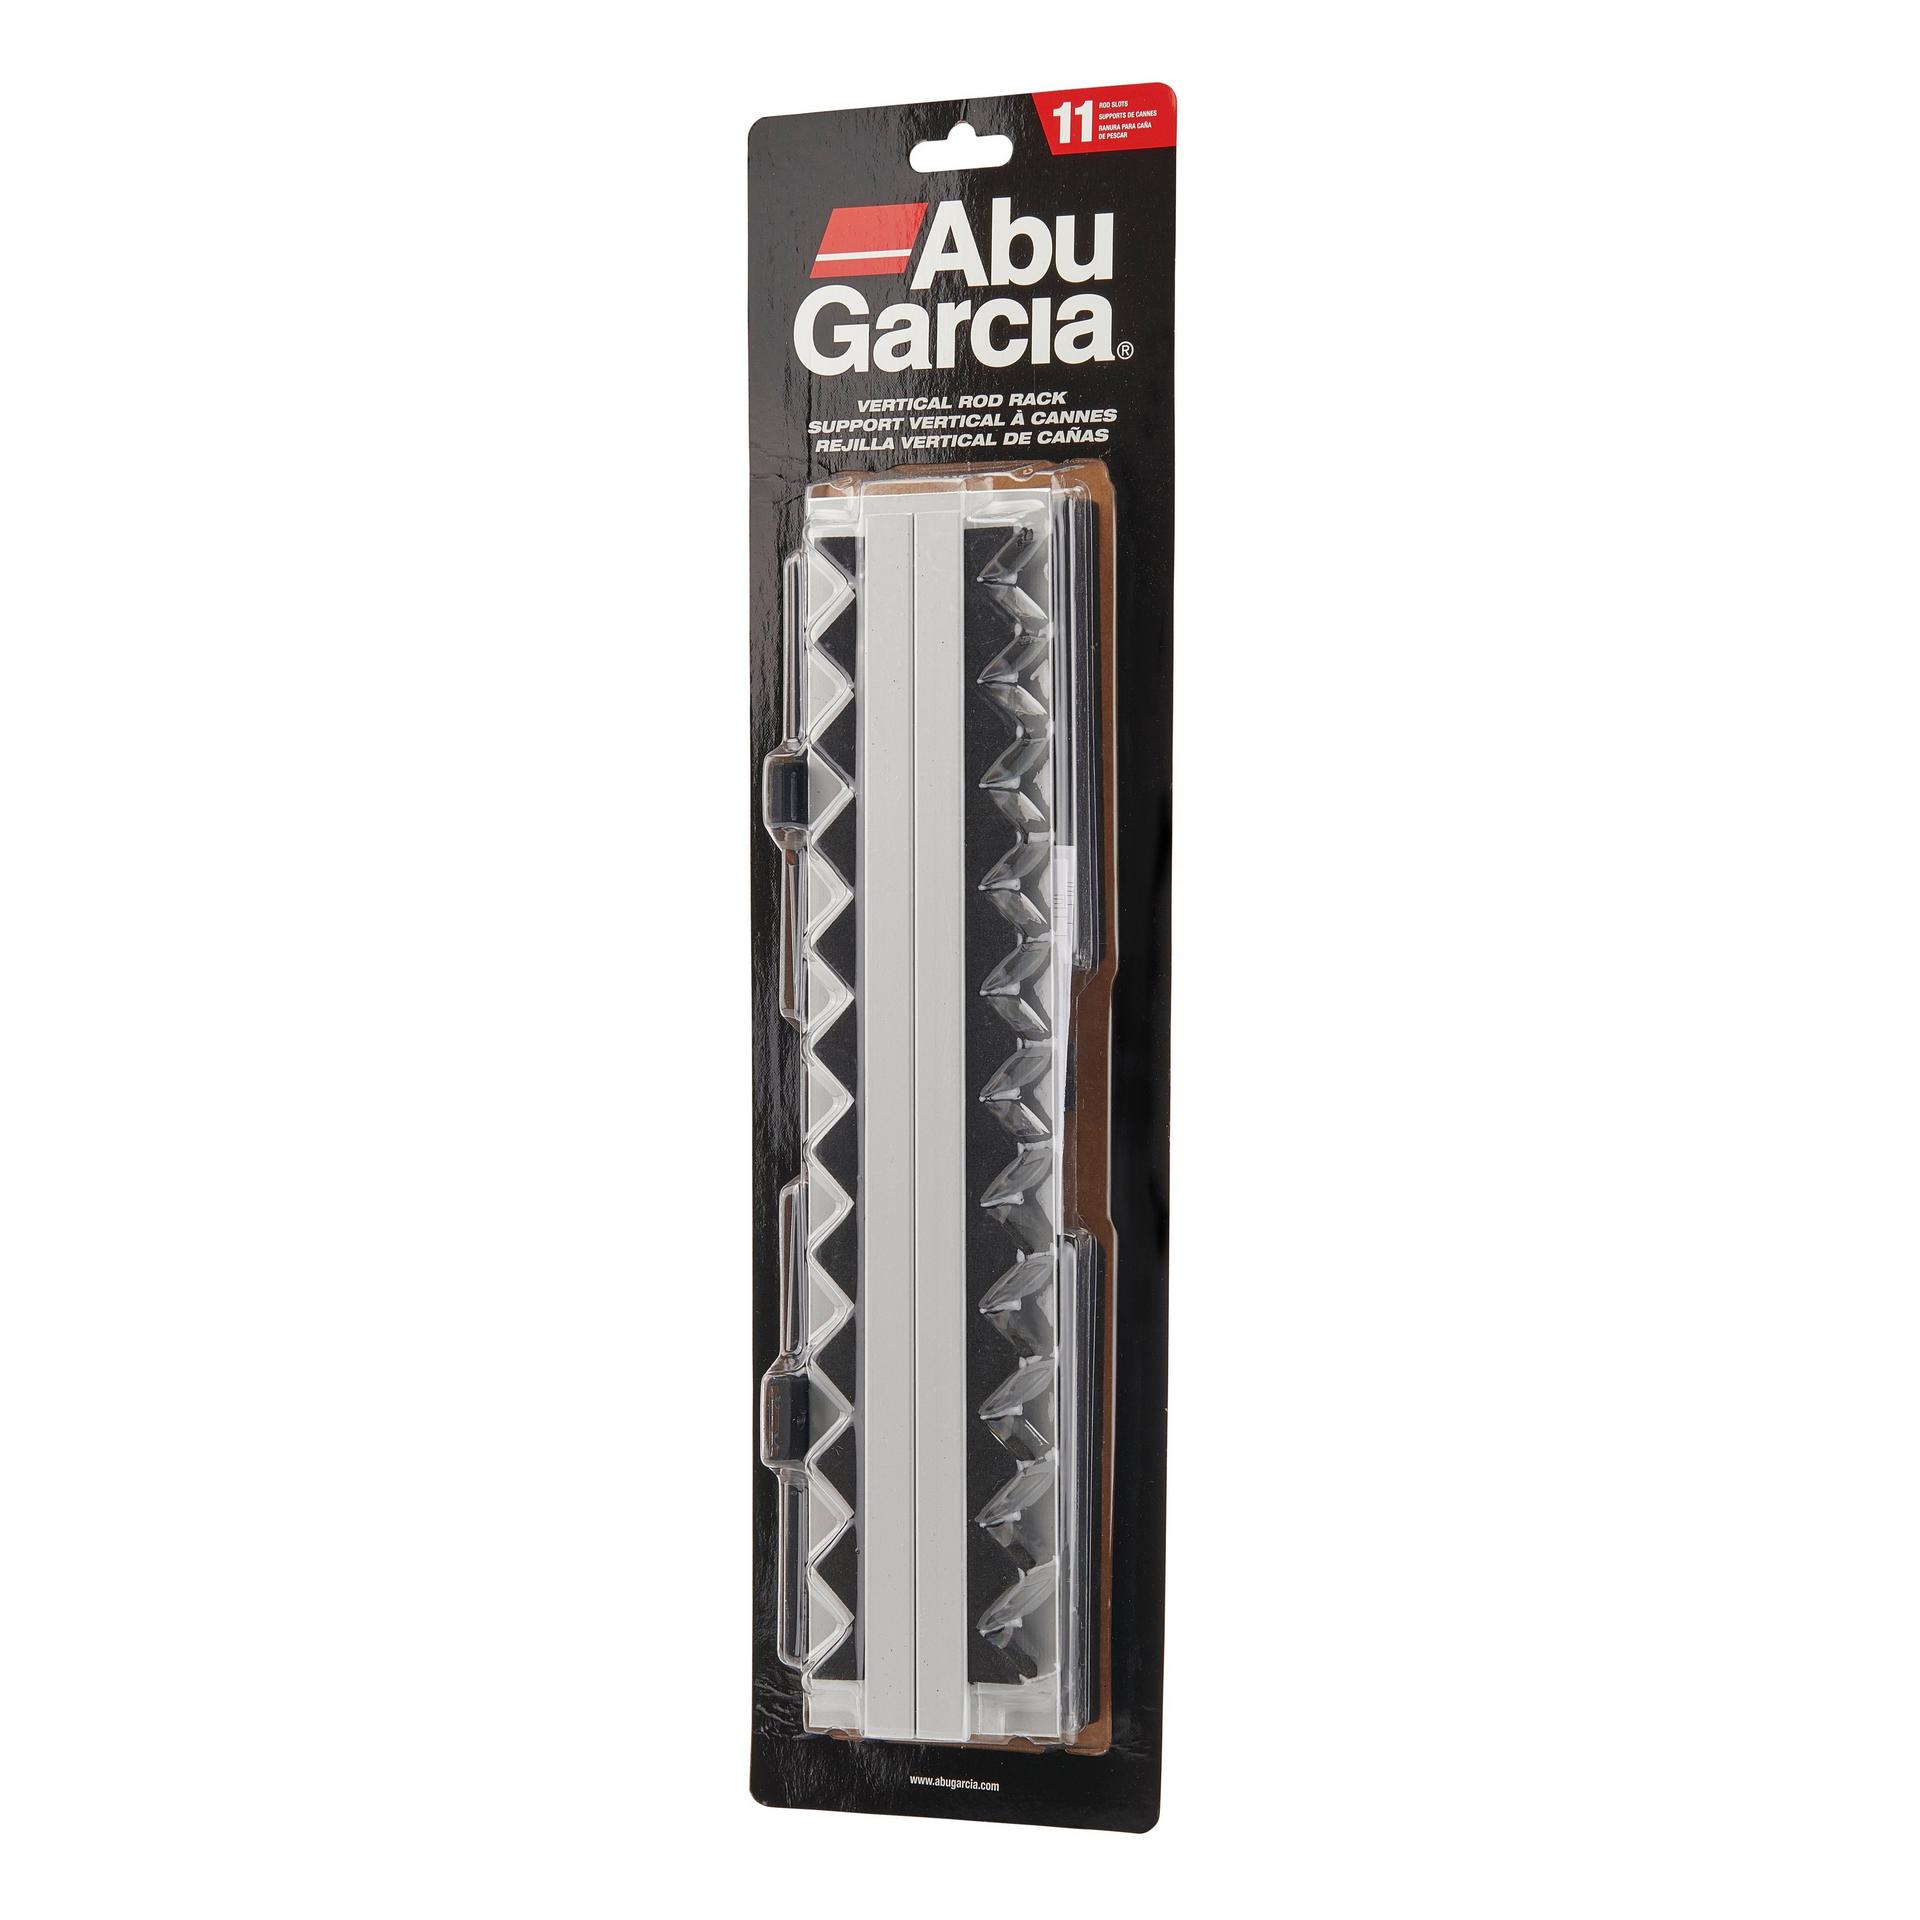 Vertical 11 Rod Rack | Abu Garcia®